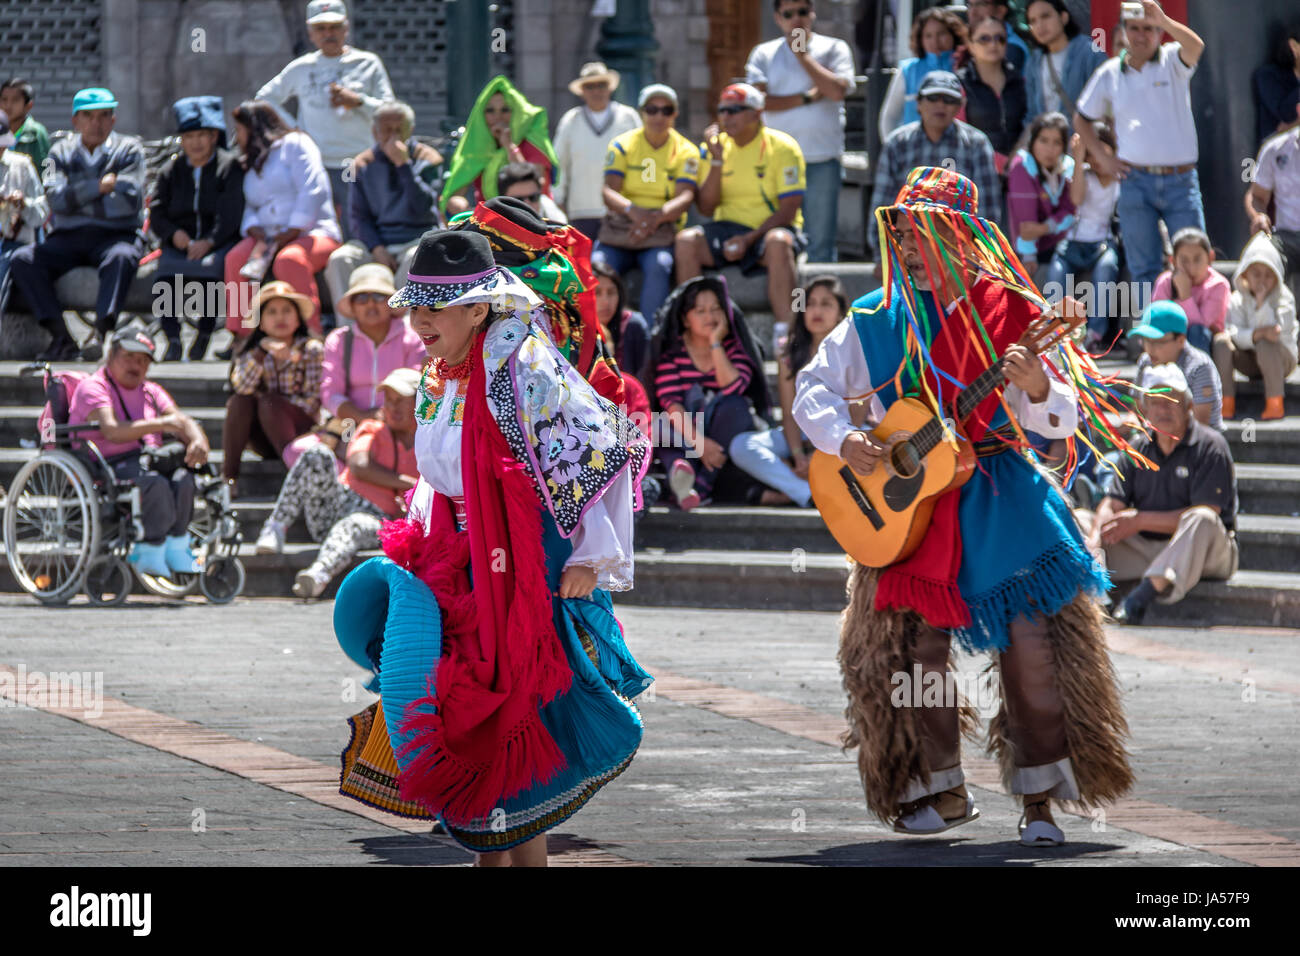 Grupo En Atuendo Local Realizan La Danza Tradicional Ecuatoriana